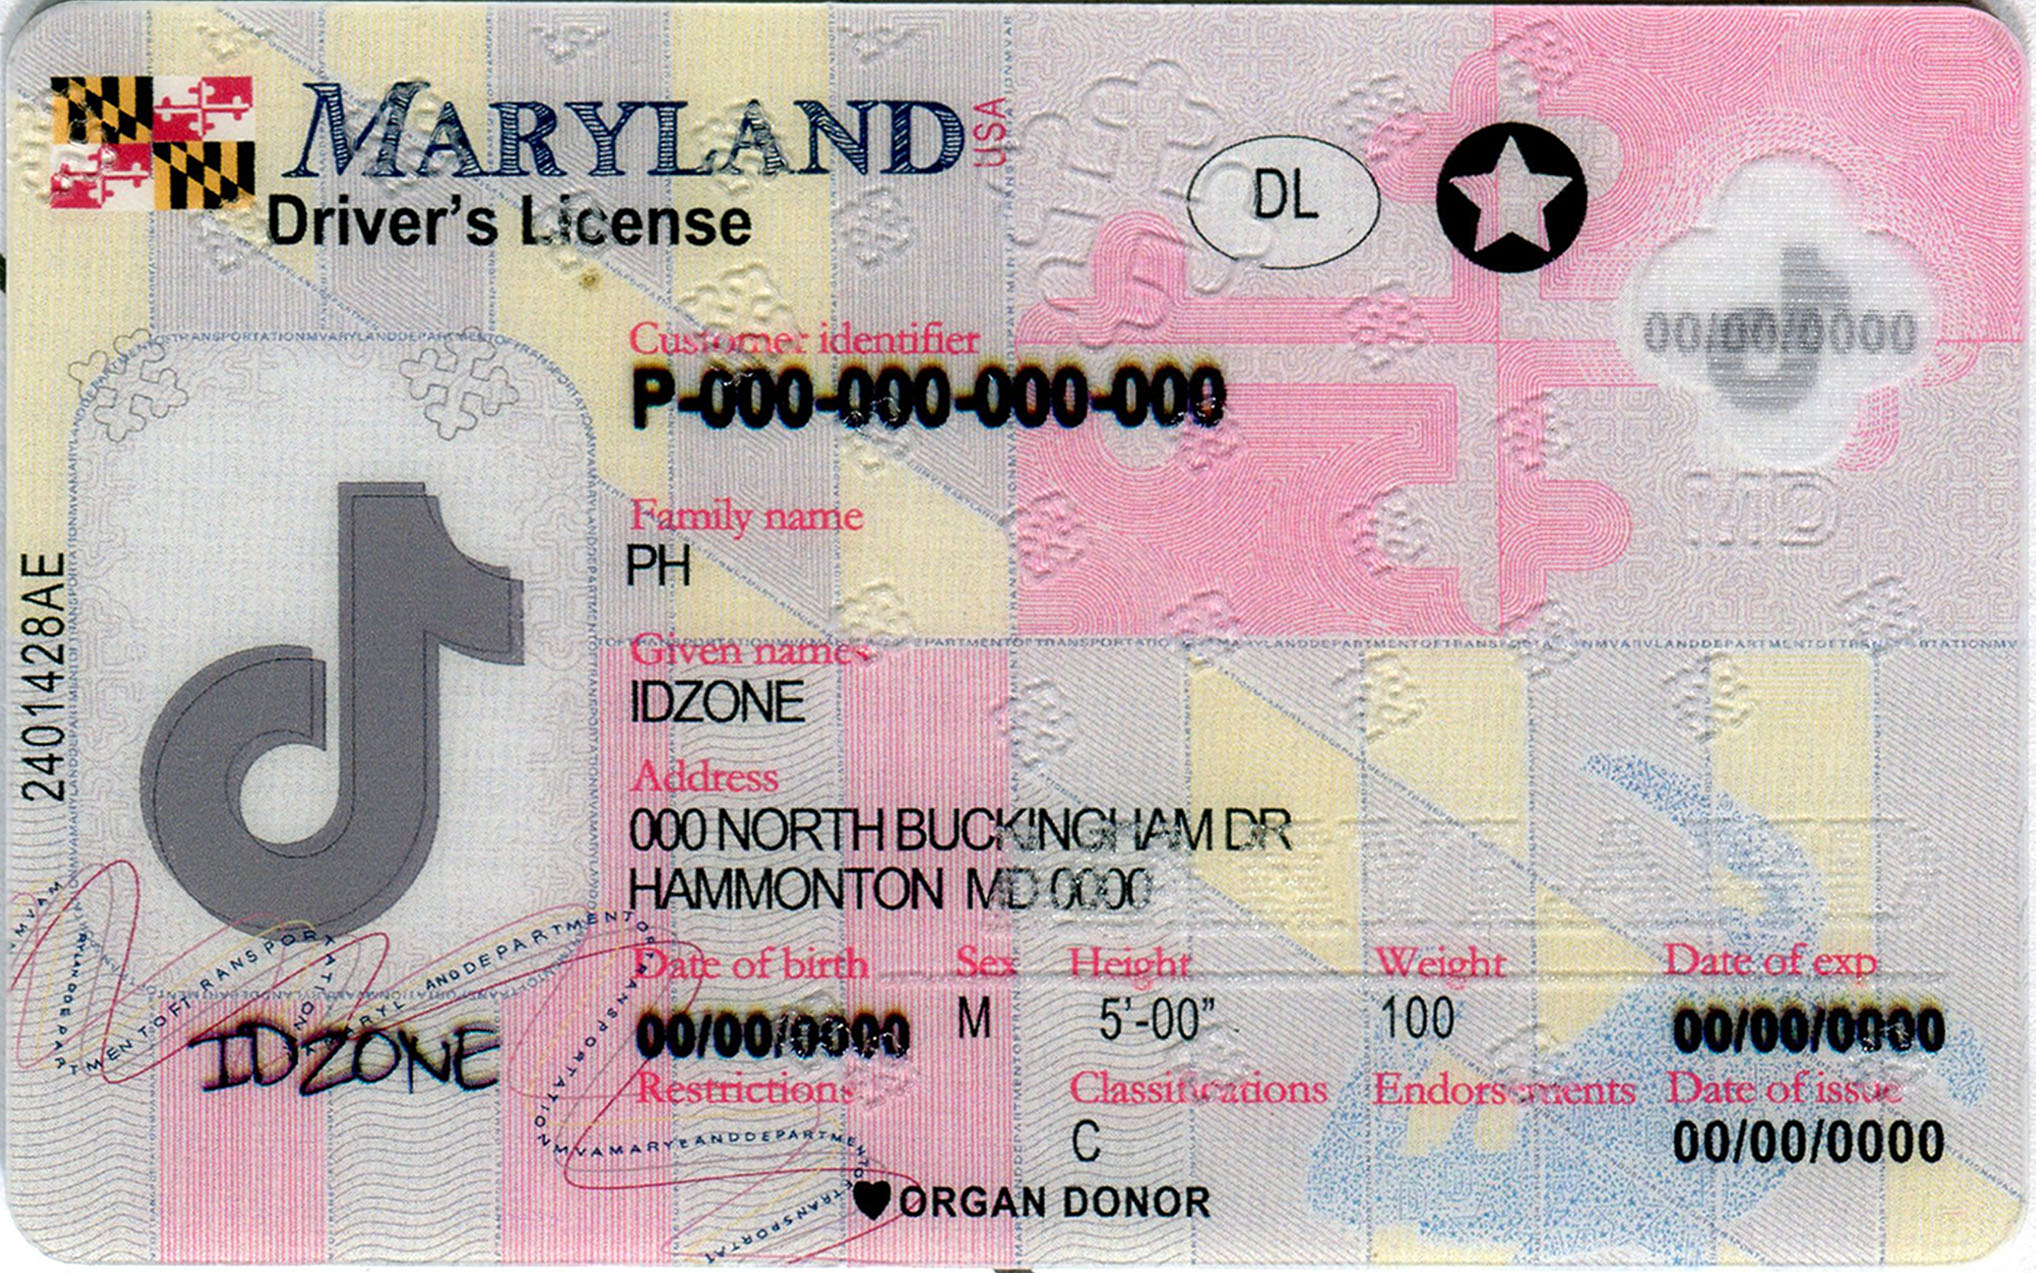 MARYLAND-New fake id